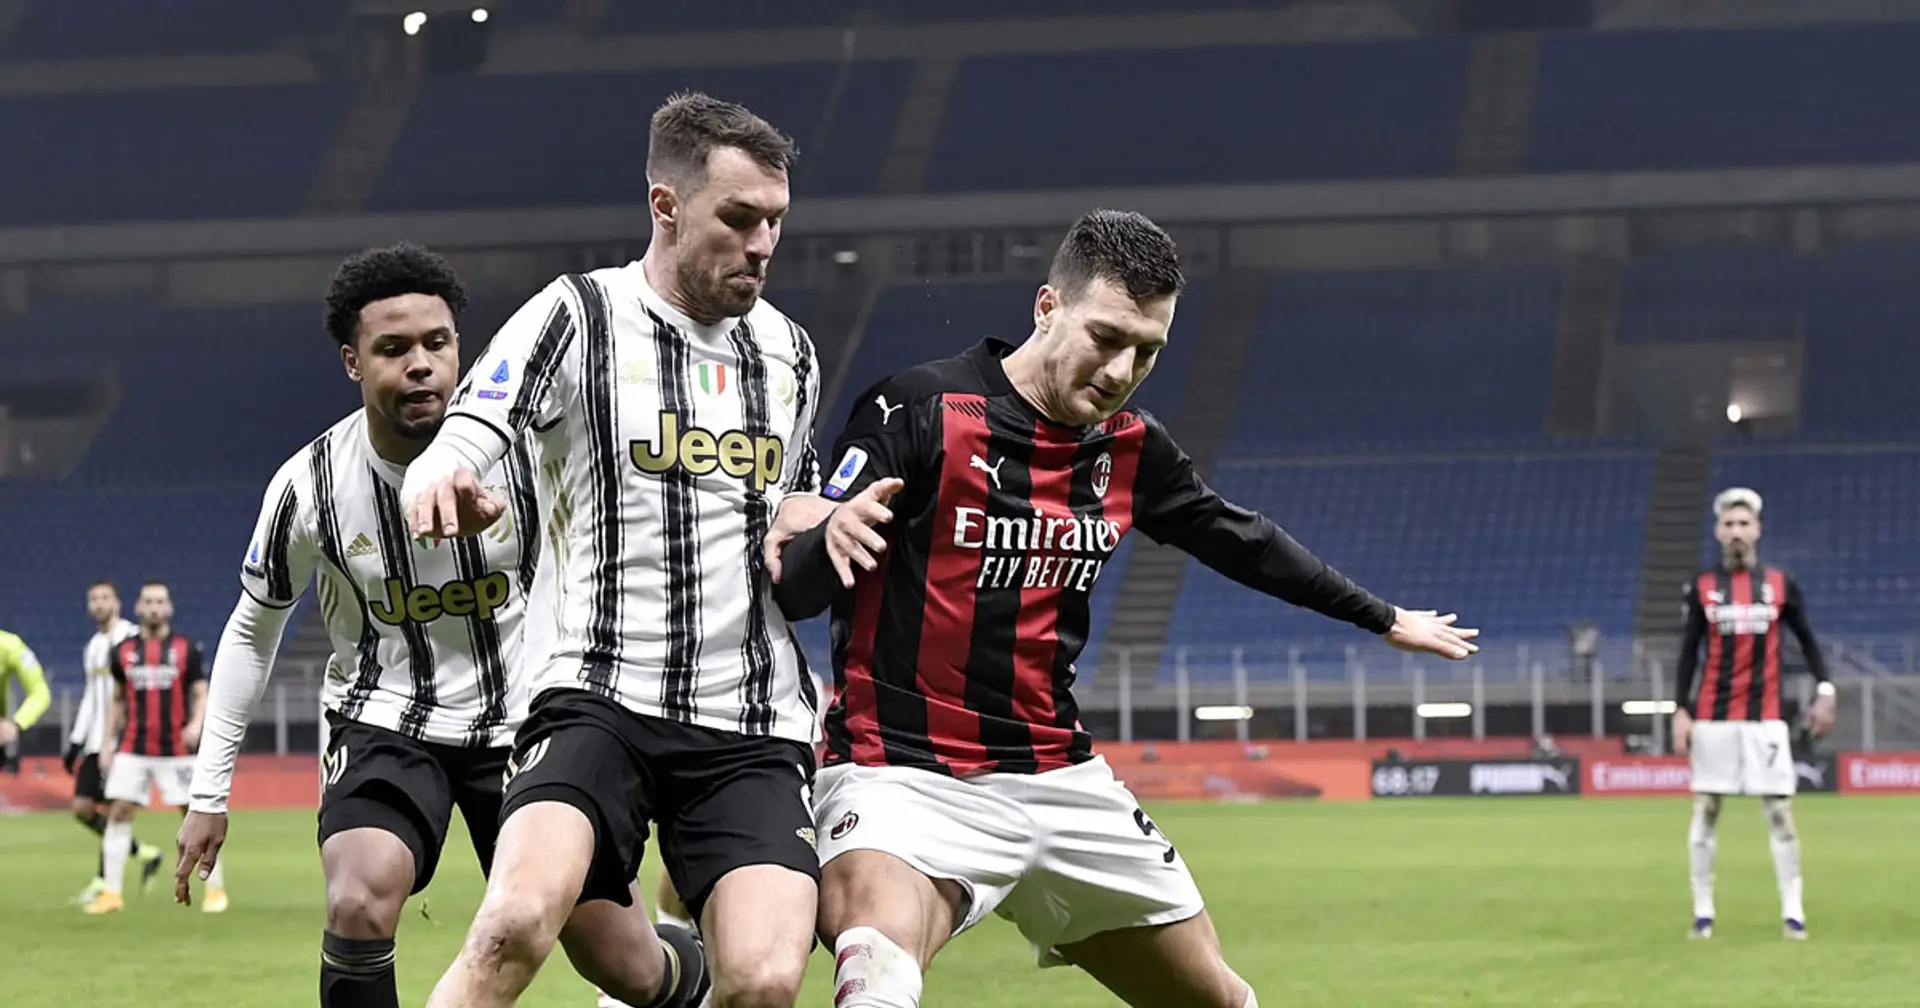 Milan vs Juventus 1-3, i bianconeri lottano ancora: le mie pagelle e i commenti ai singoli